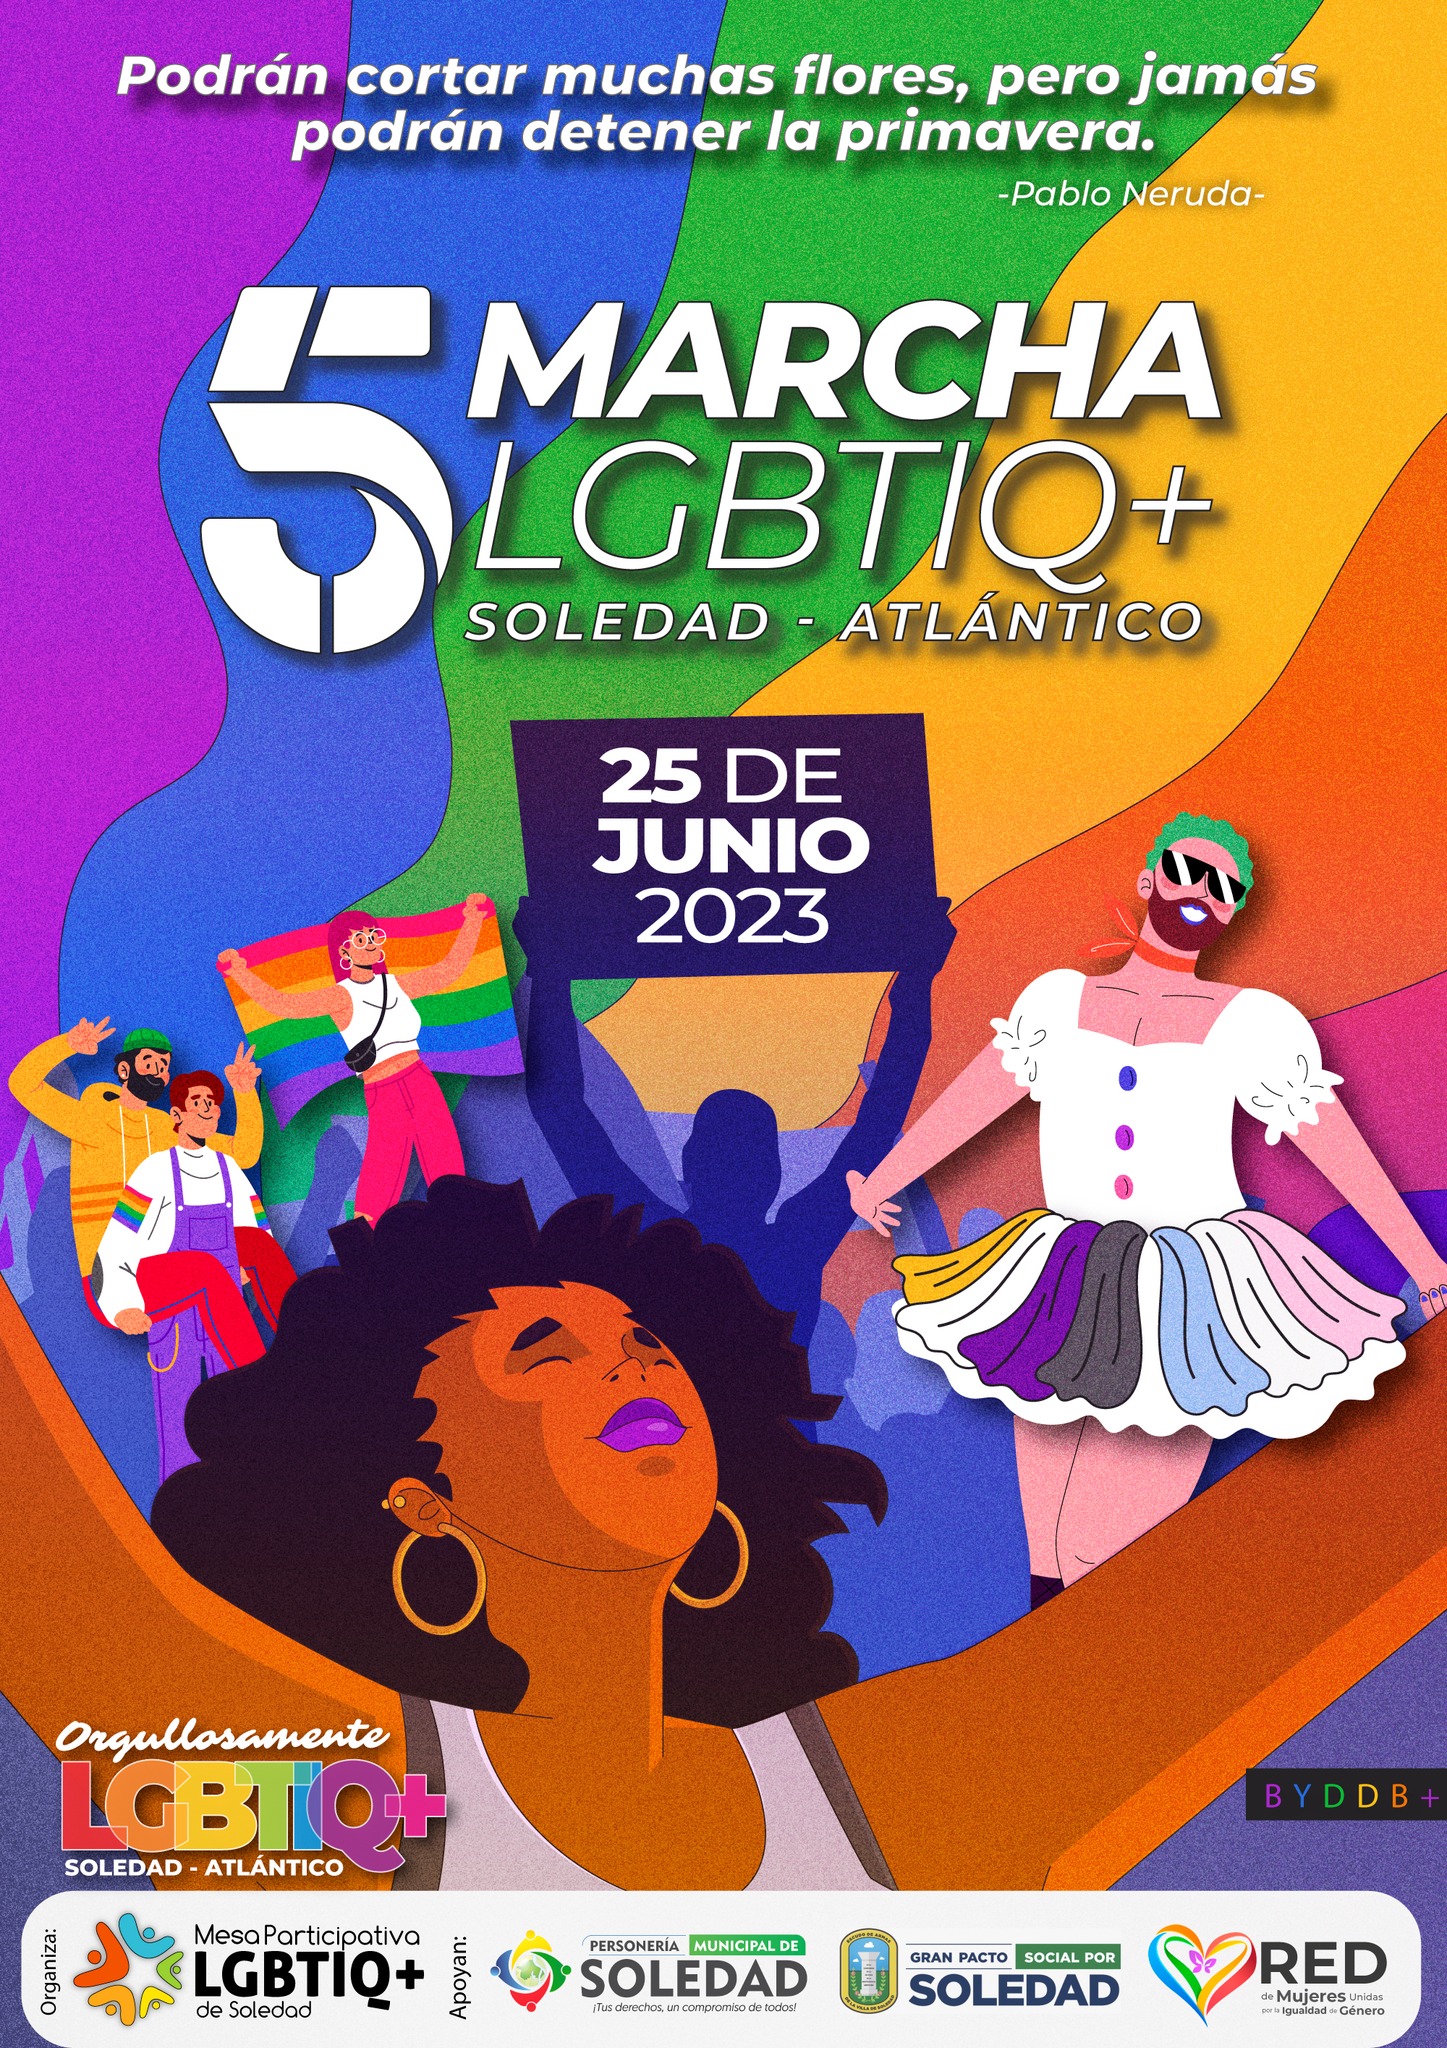 5 Marcha LGBTIQ+ Soledad 2023